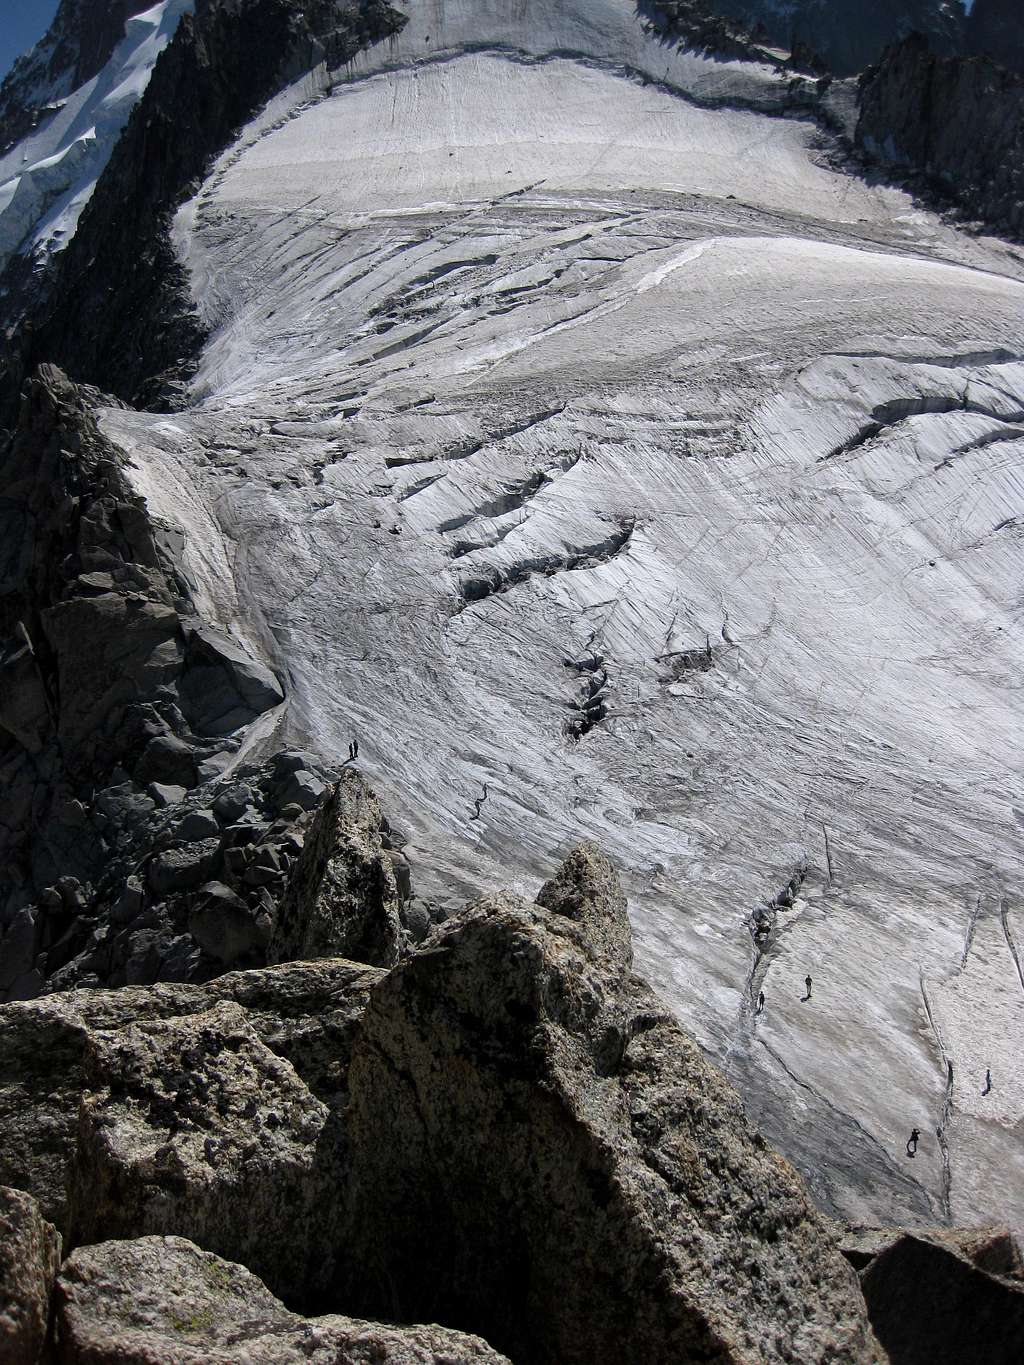 The glacier at the base of Petite Aiguille Verte